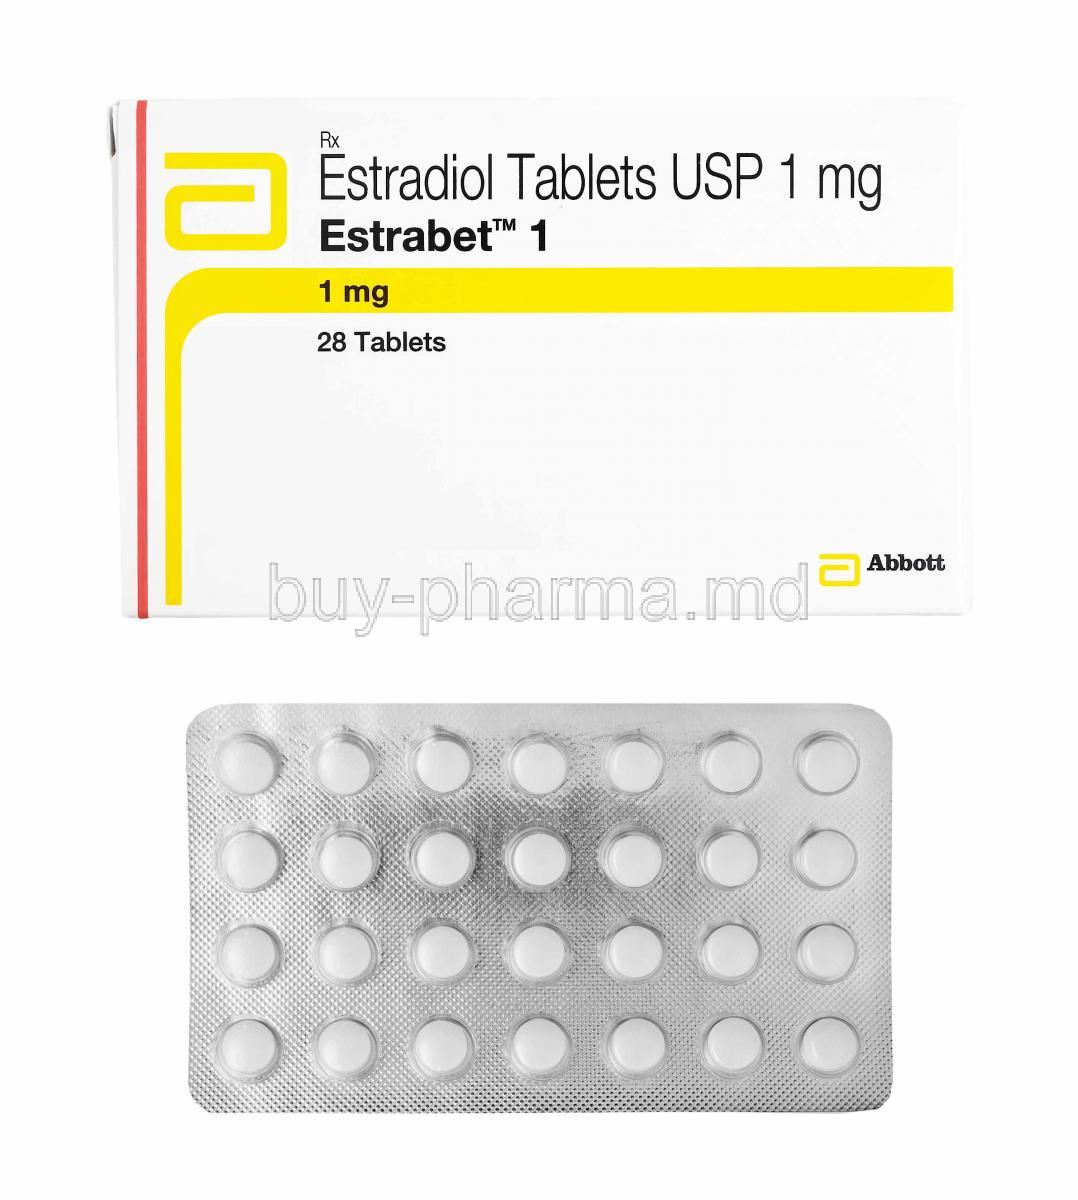 Estrabet, Estradiol 1mg box and tablets